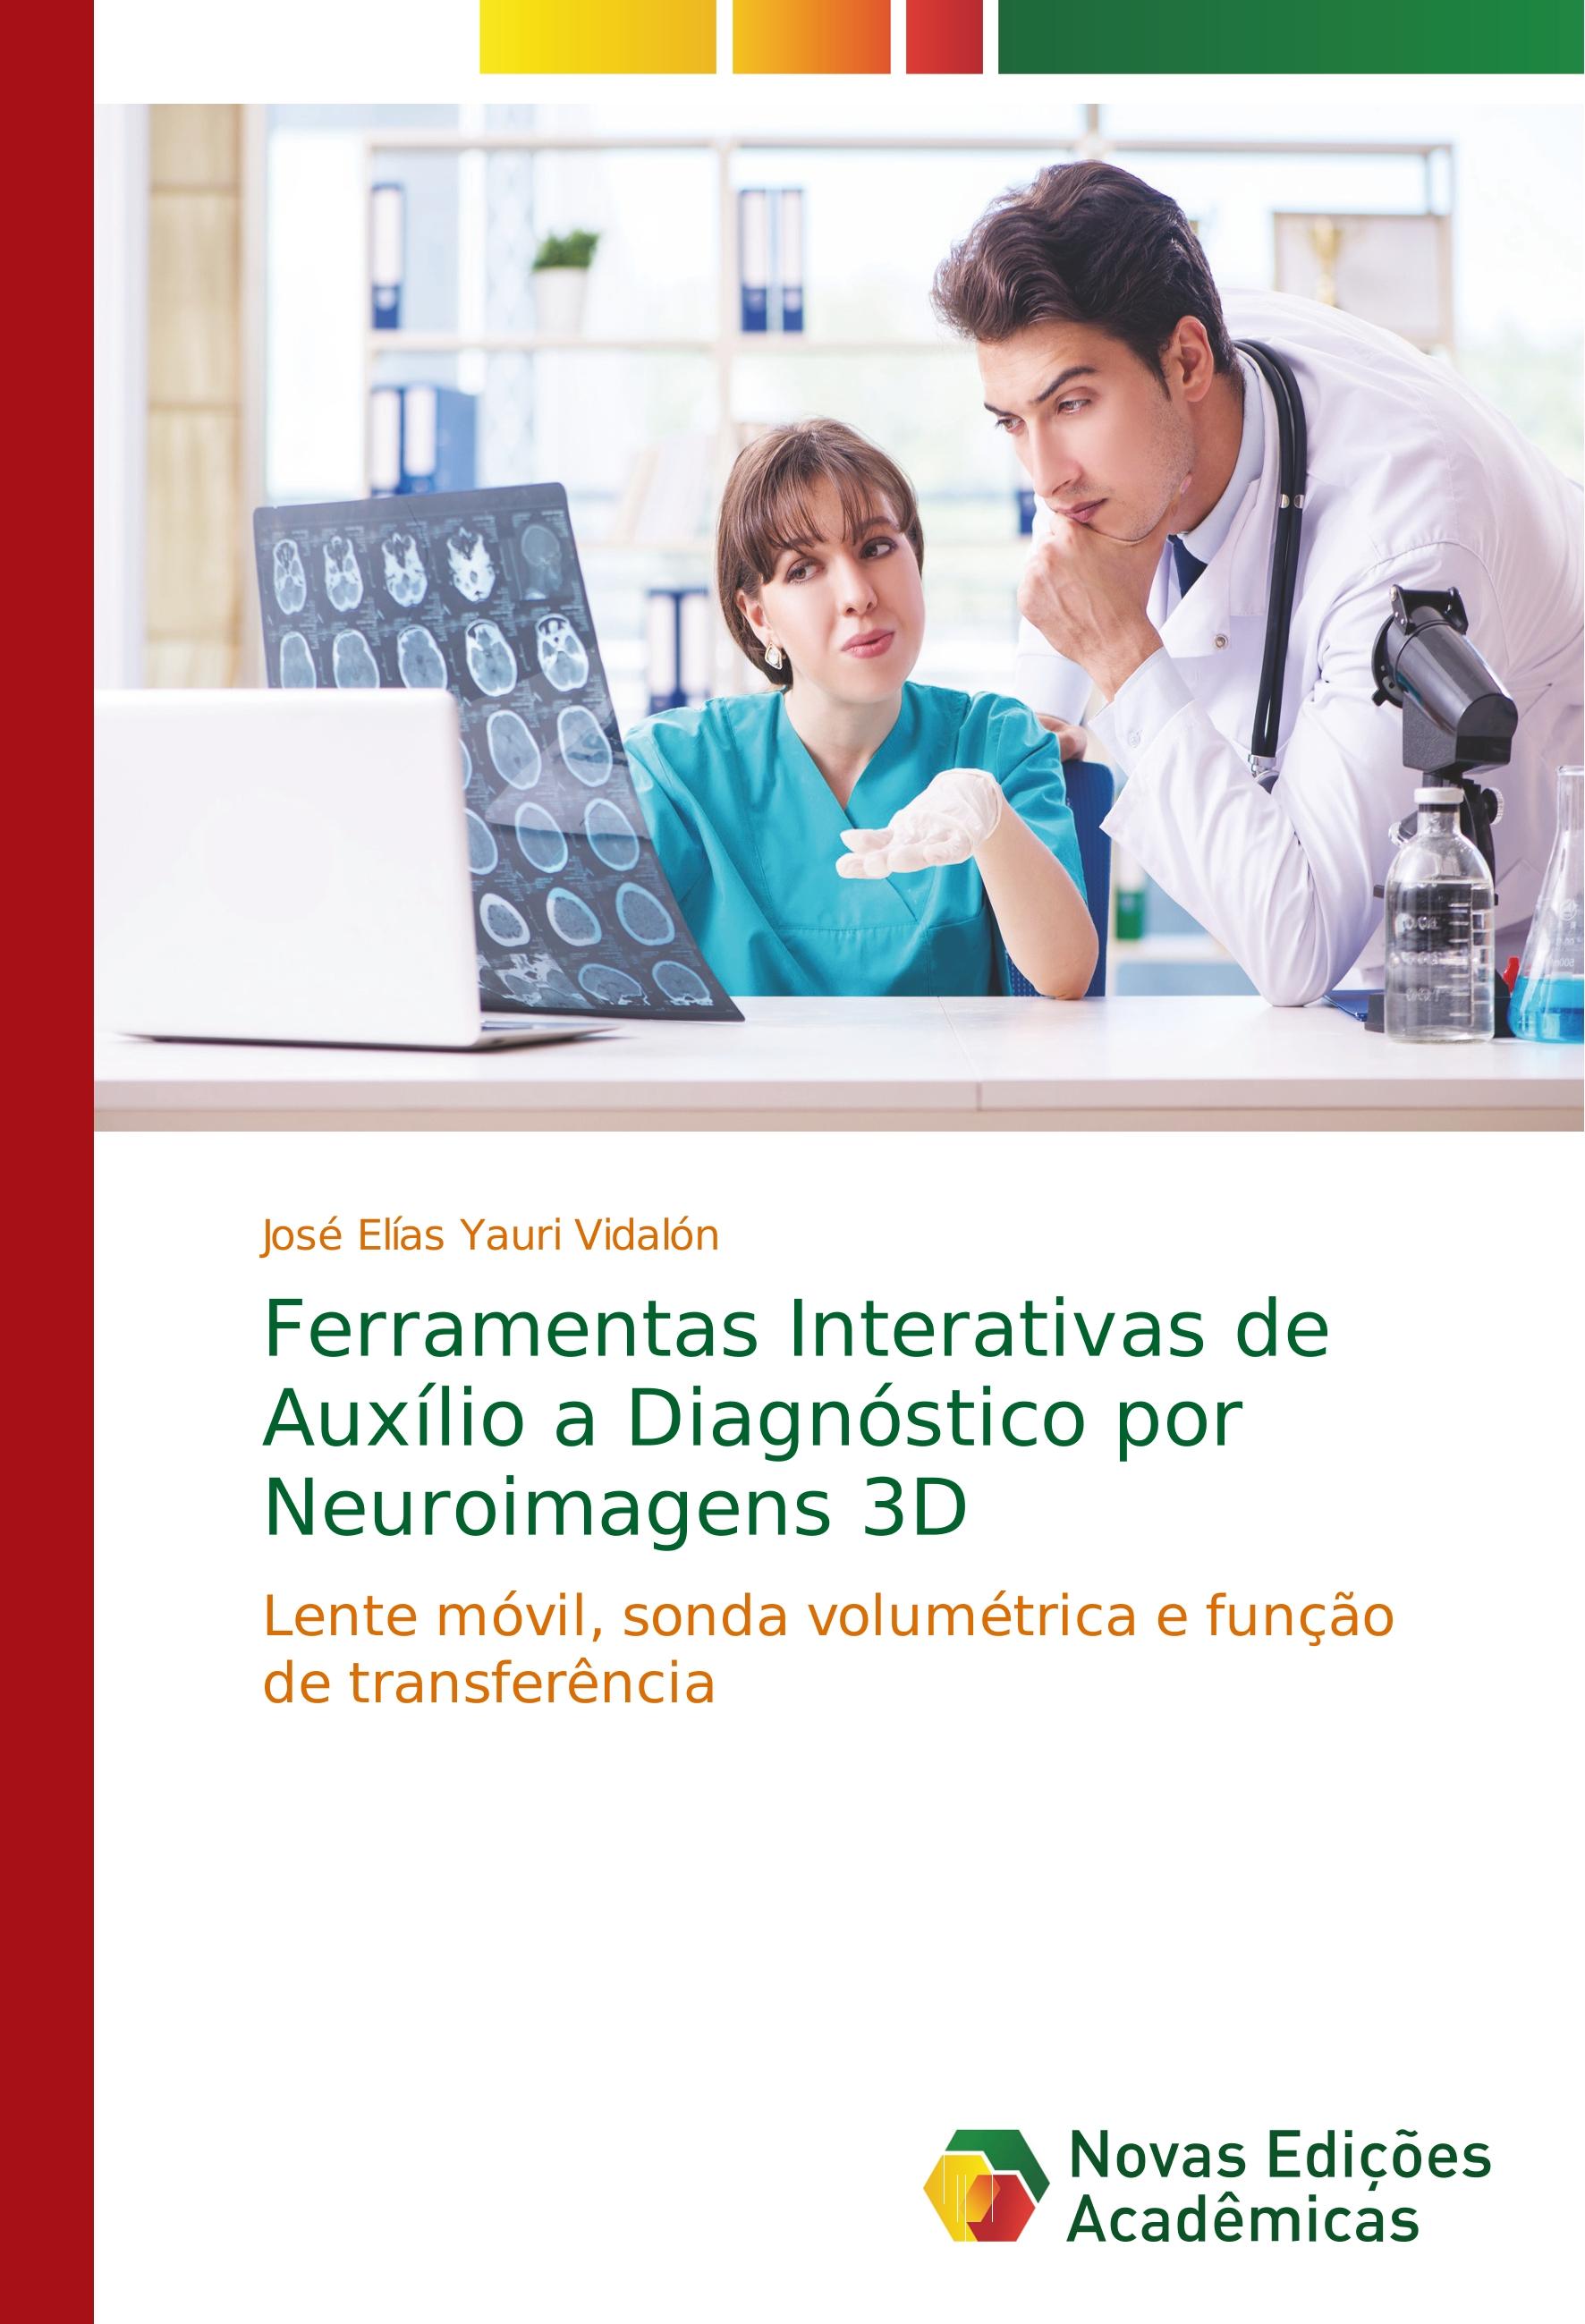 Ferramentas Interativas de Auxílio a Diagnóstico por Neuroimagens 3D - José Elías Yauri Vidalón